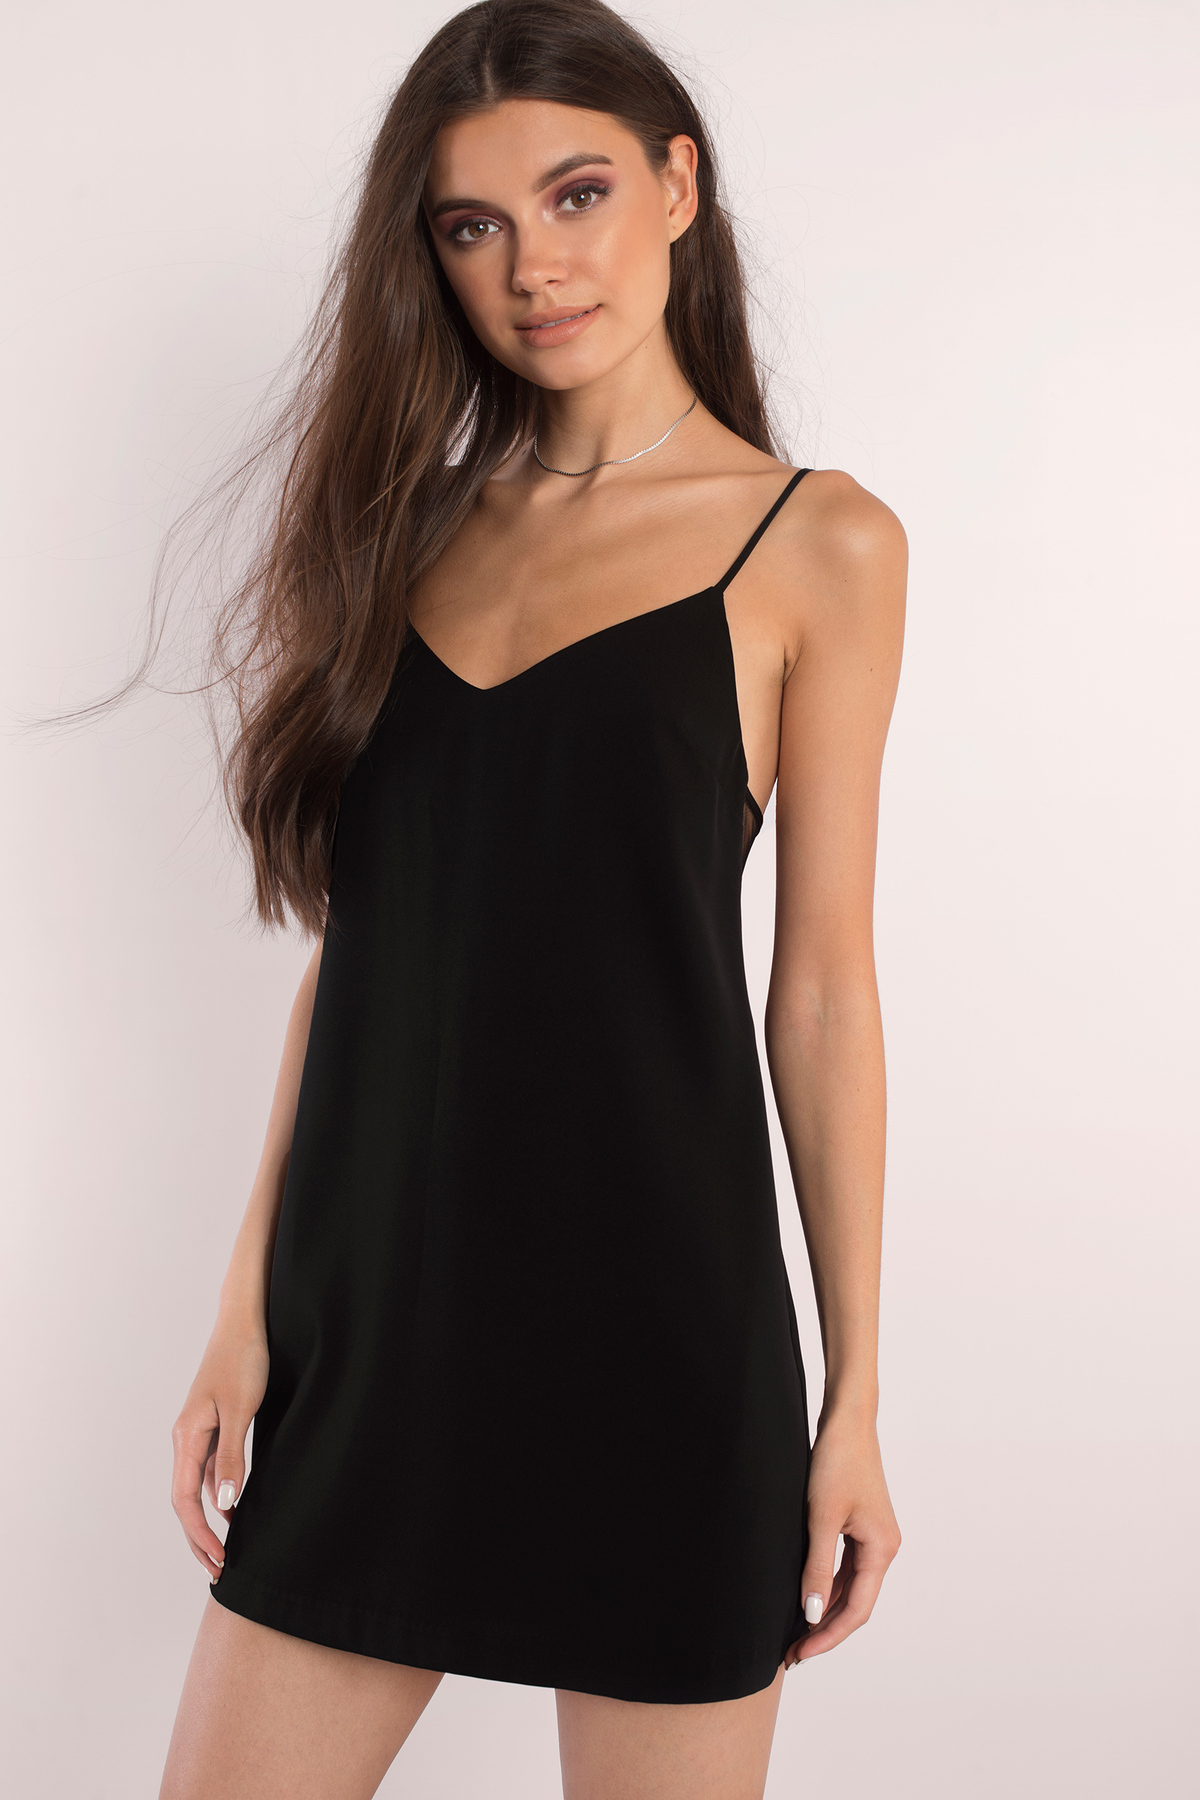 Lucy Mesh Shift Dress in Black - $18 | Tobi US